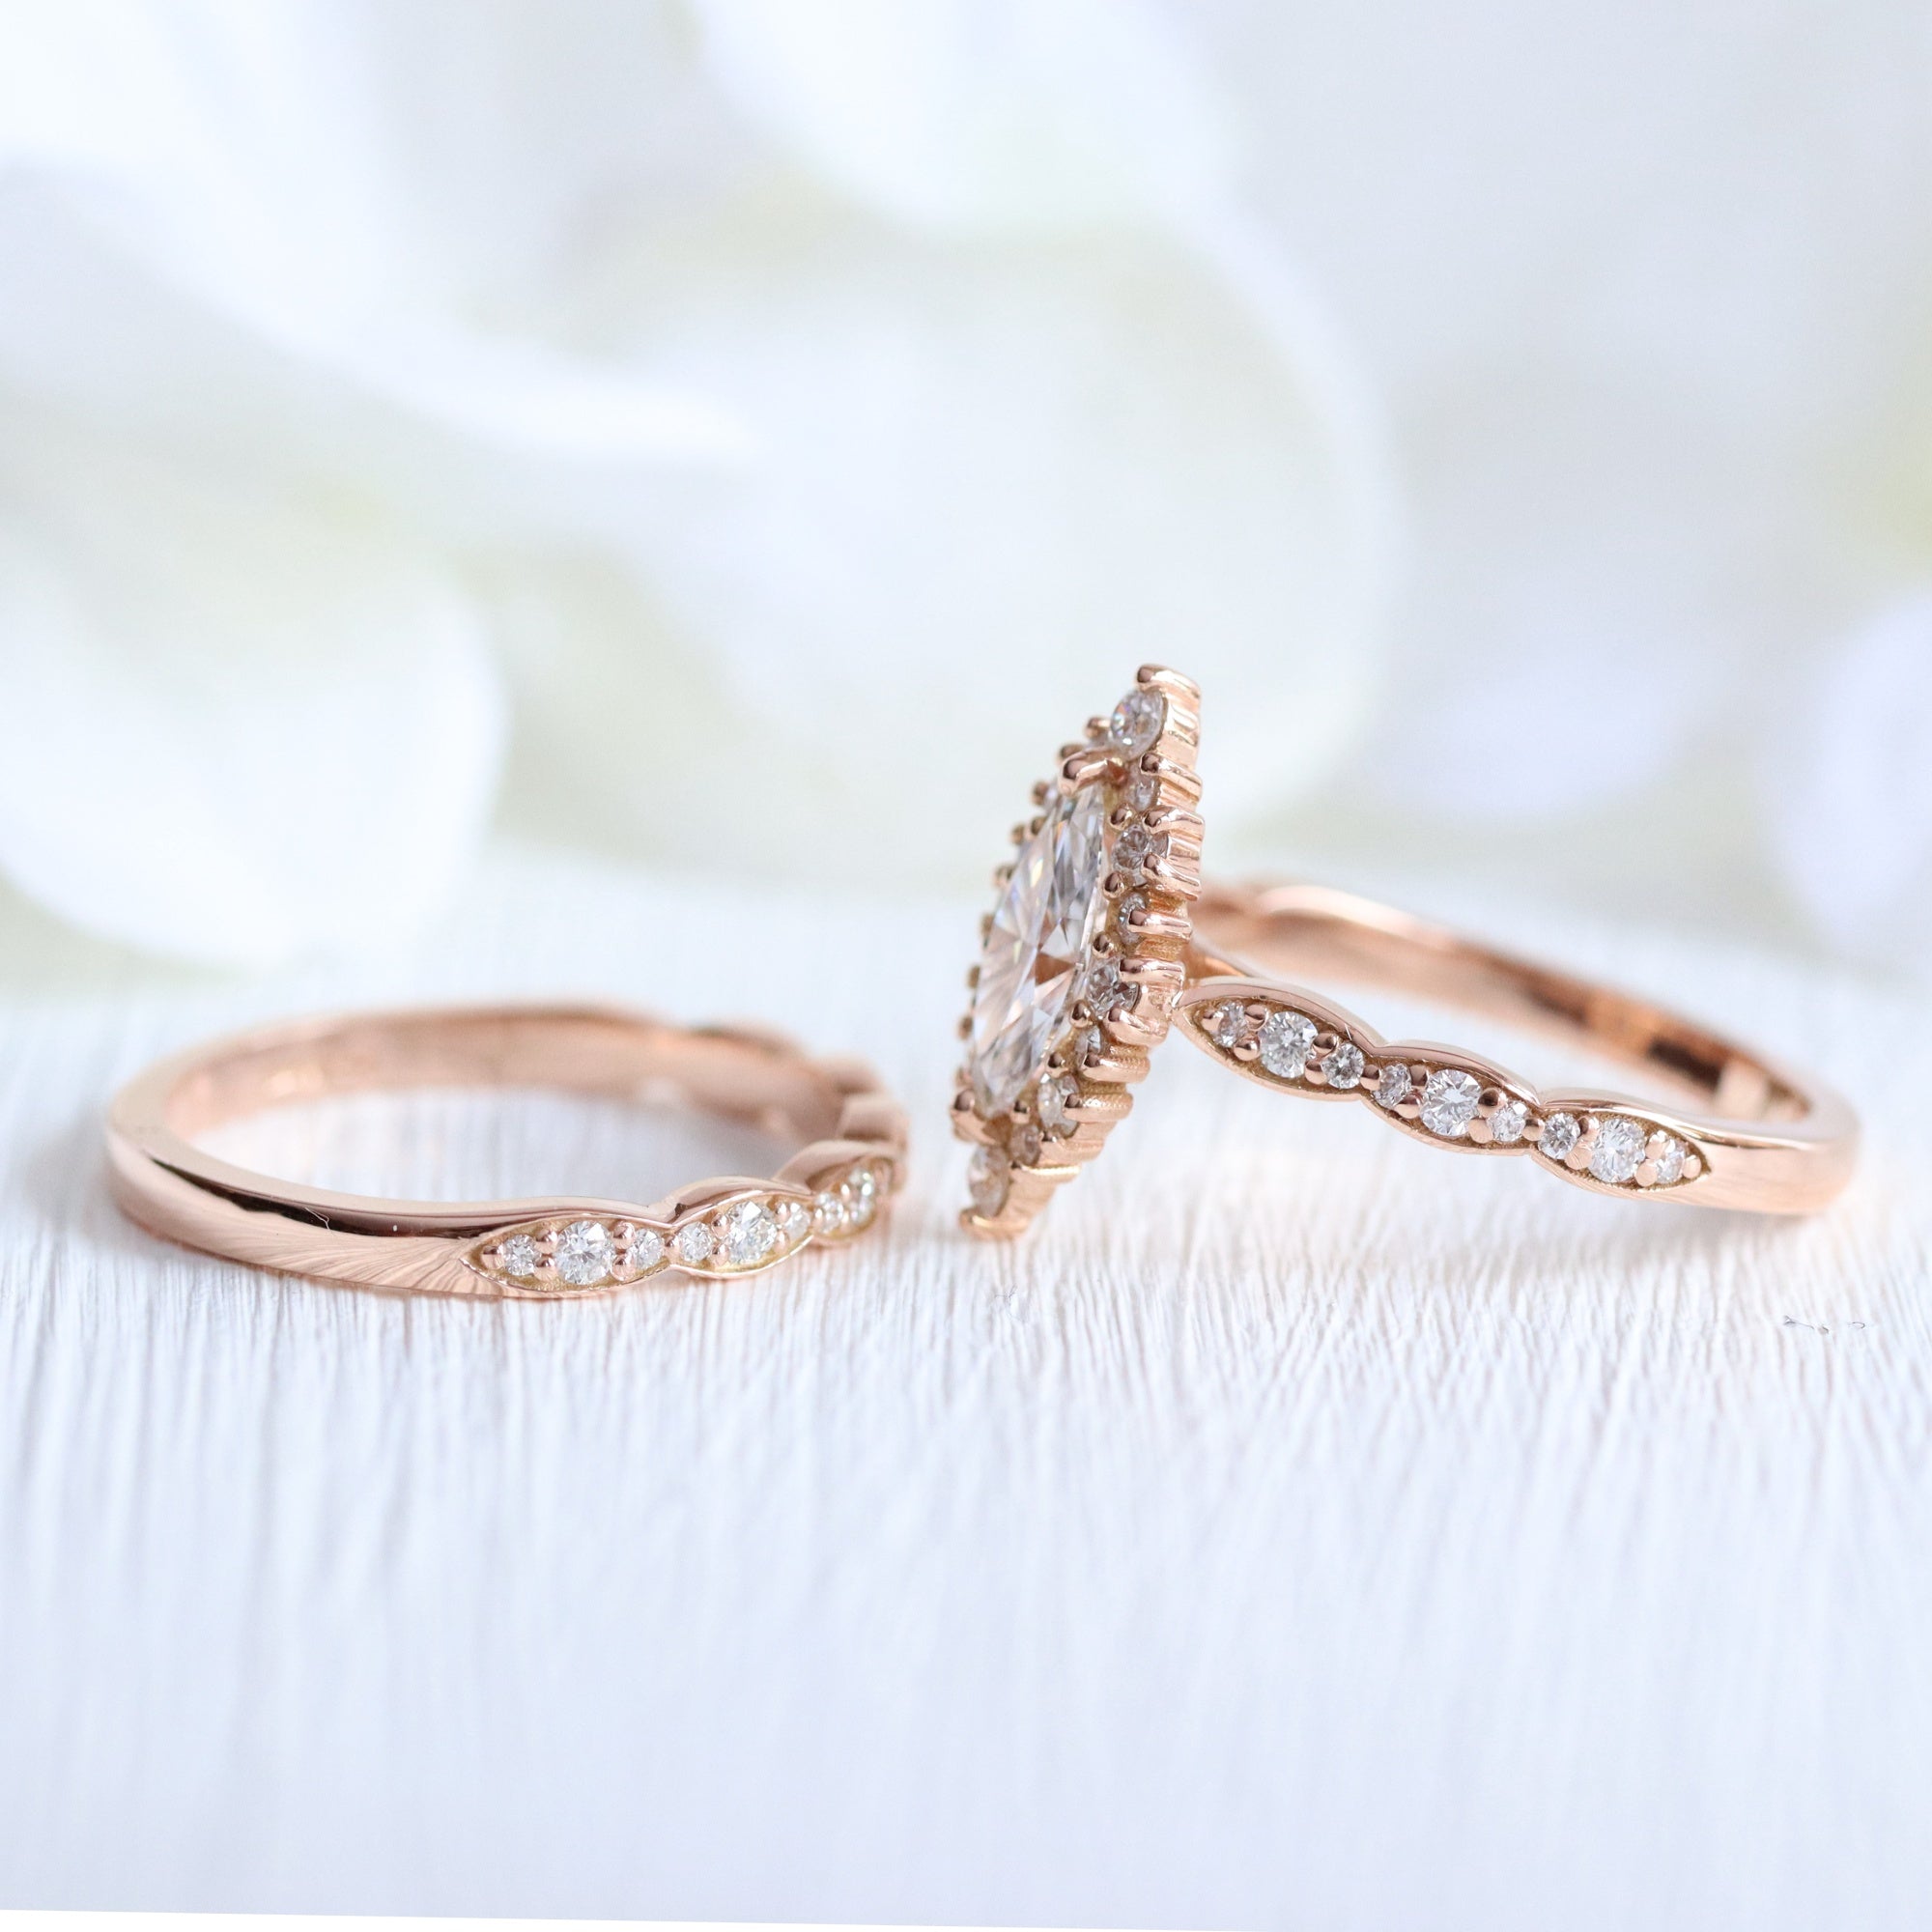 Unique Bridal Diamond Engagement Ring Set, Matching Diamond Halo